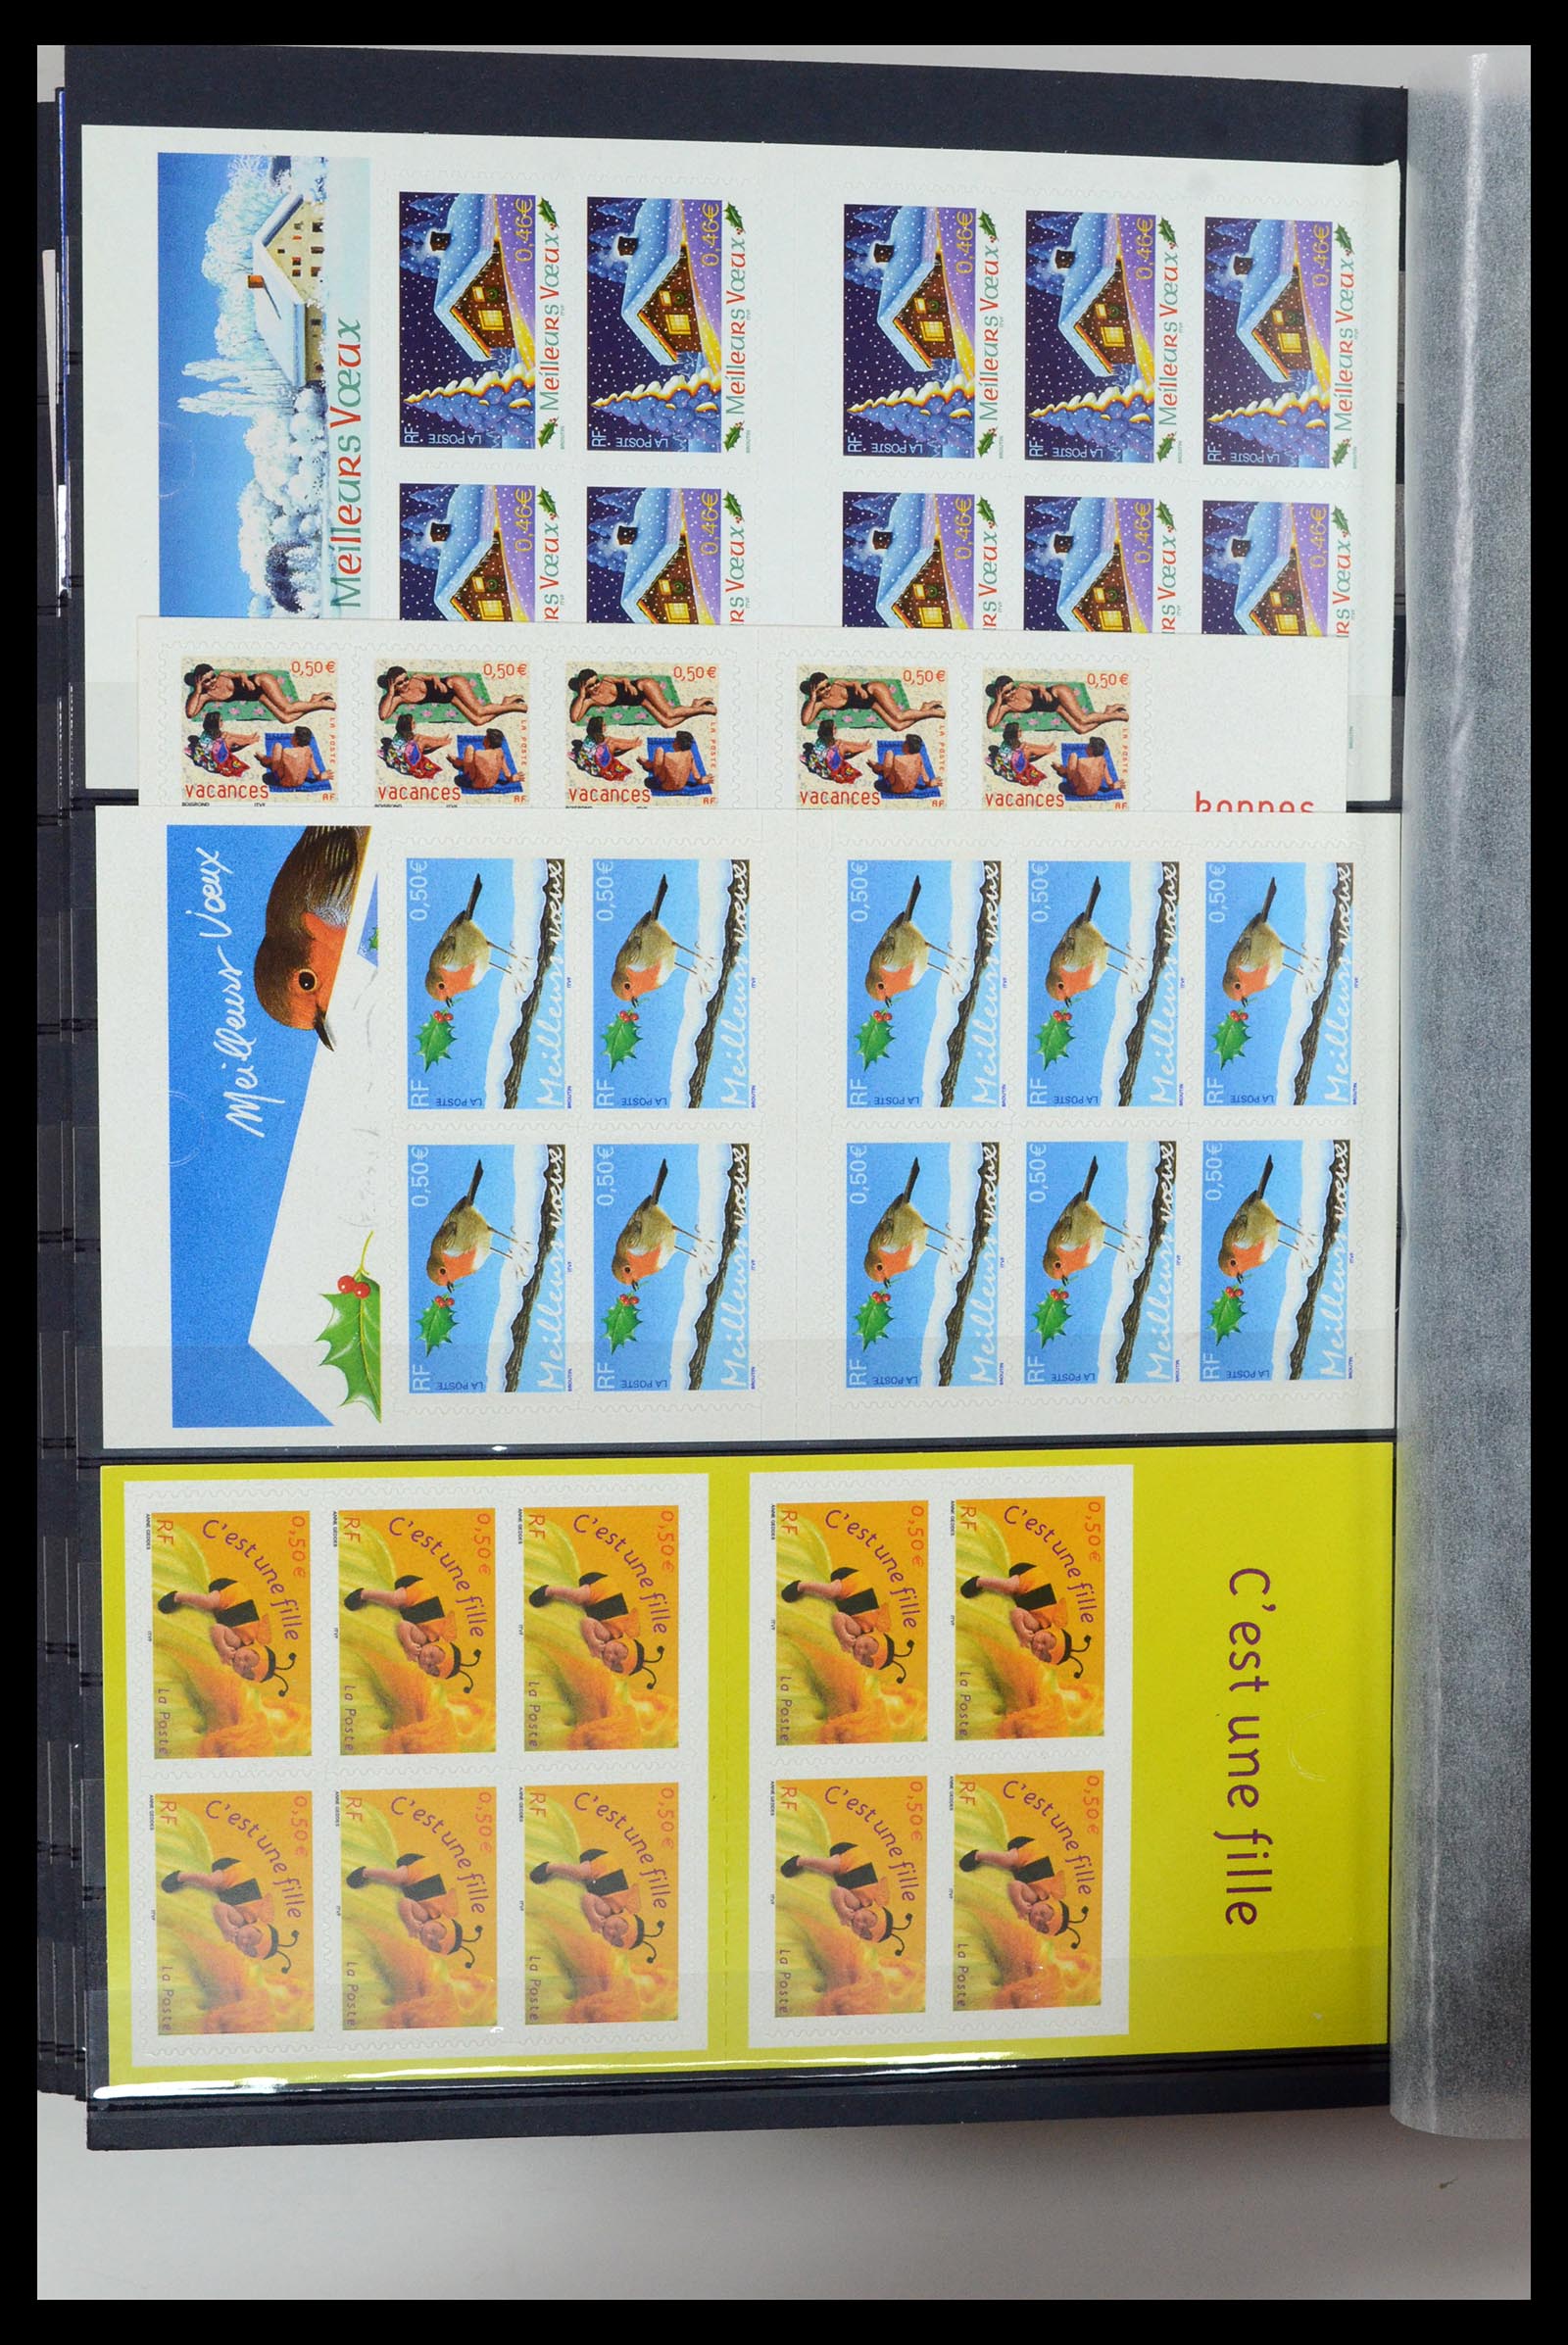 36728 040 - Stamp collection 36728 France stamp booklets 1952-2011.